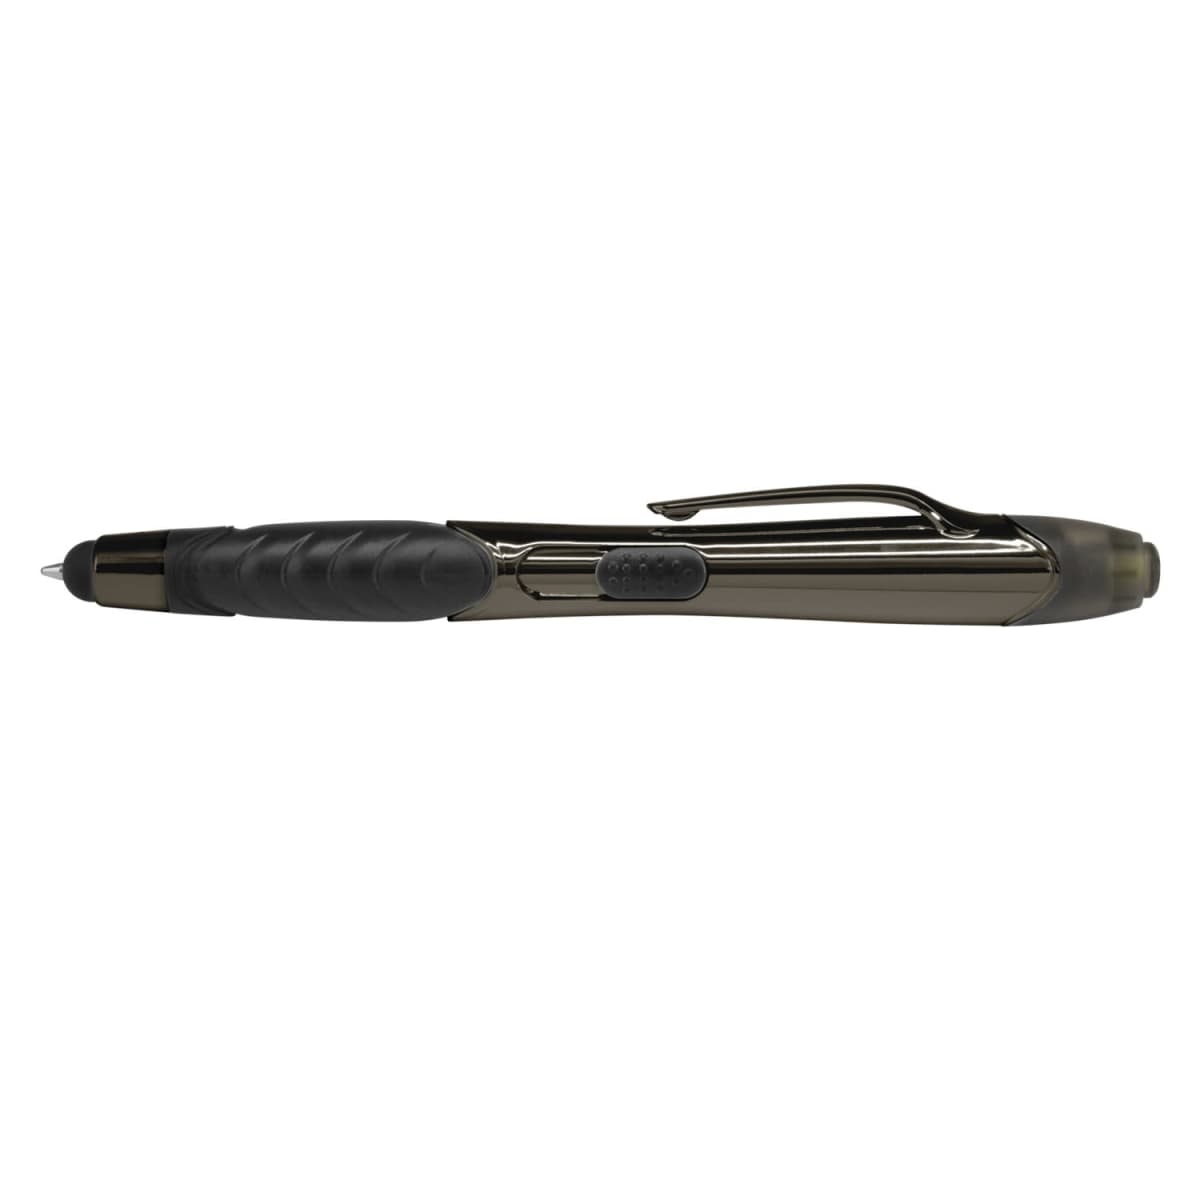 Nexus Elite Multi-Function Pen